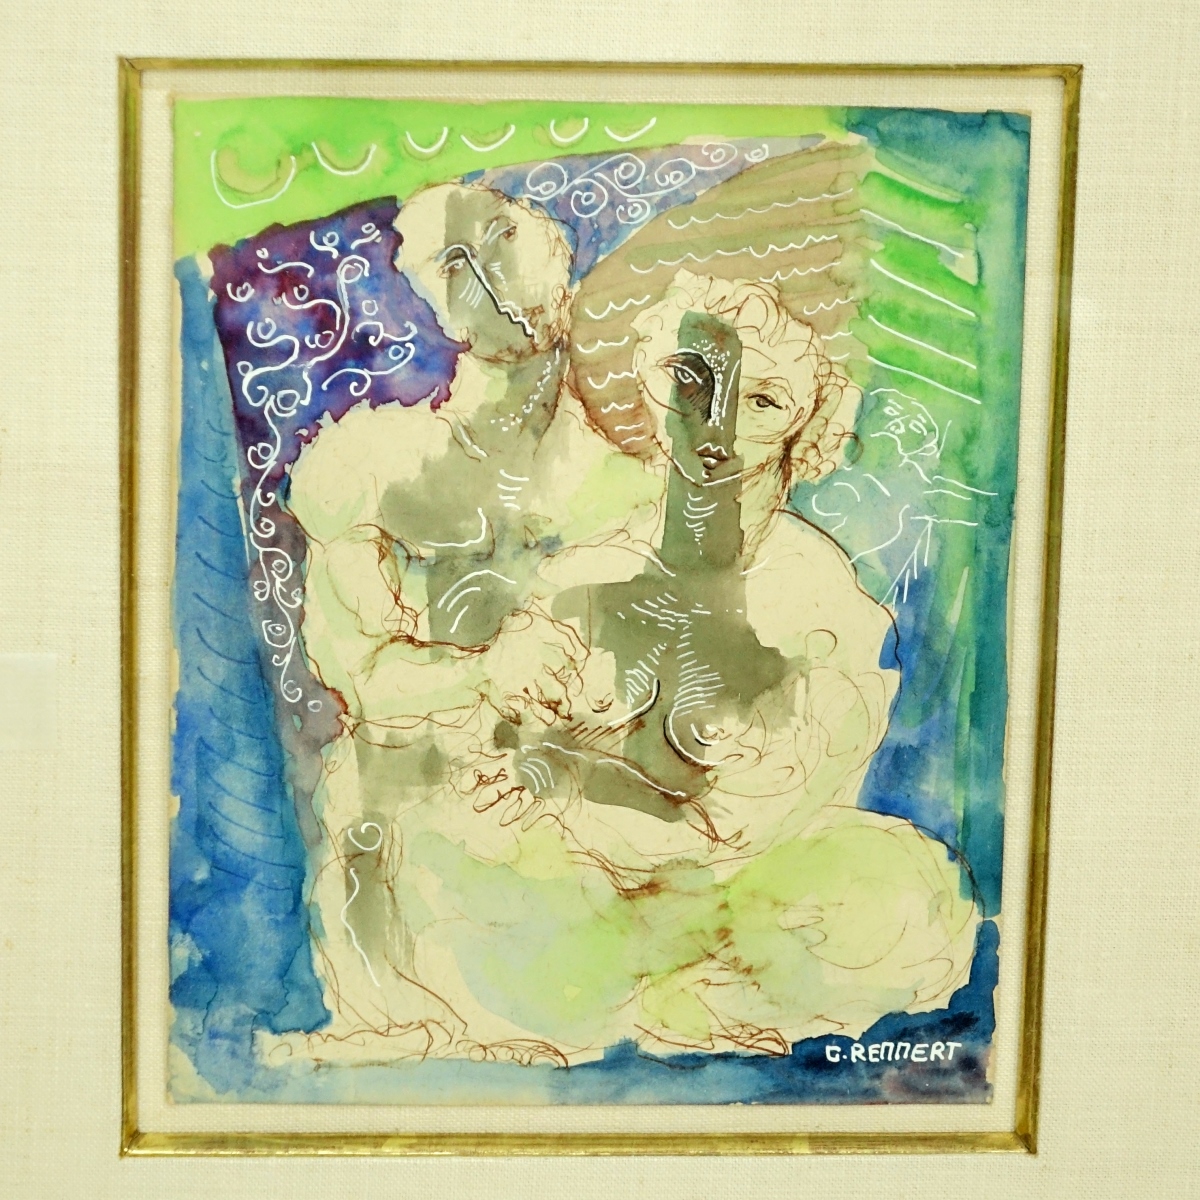 Gershon Rennert,German (1929-2009) Two Watercolors